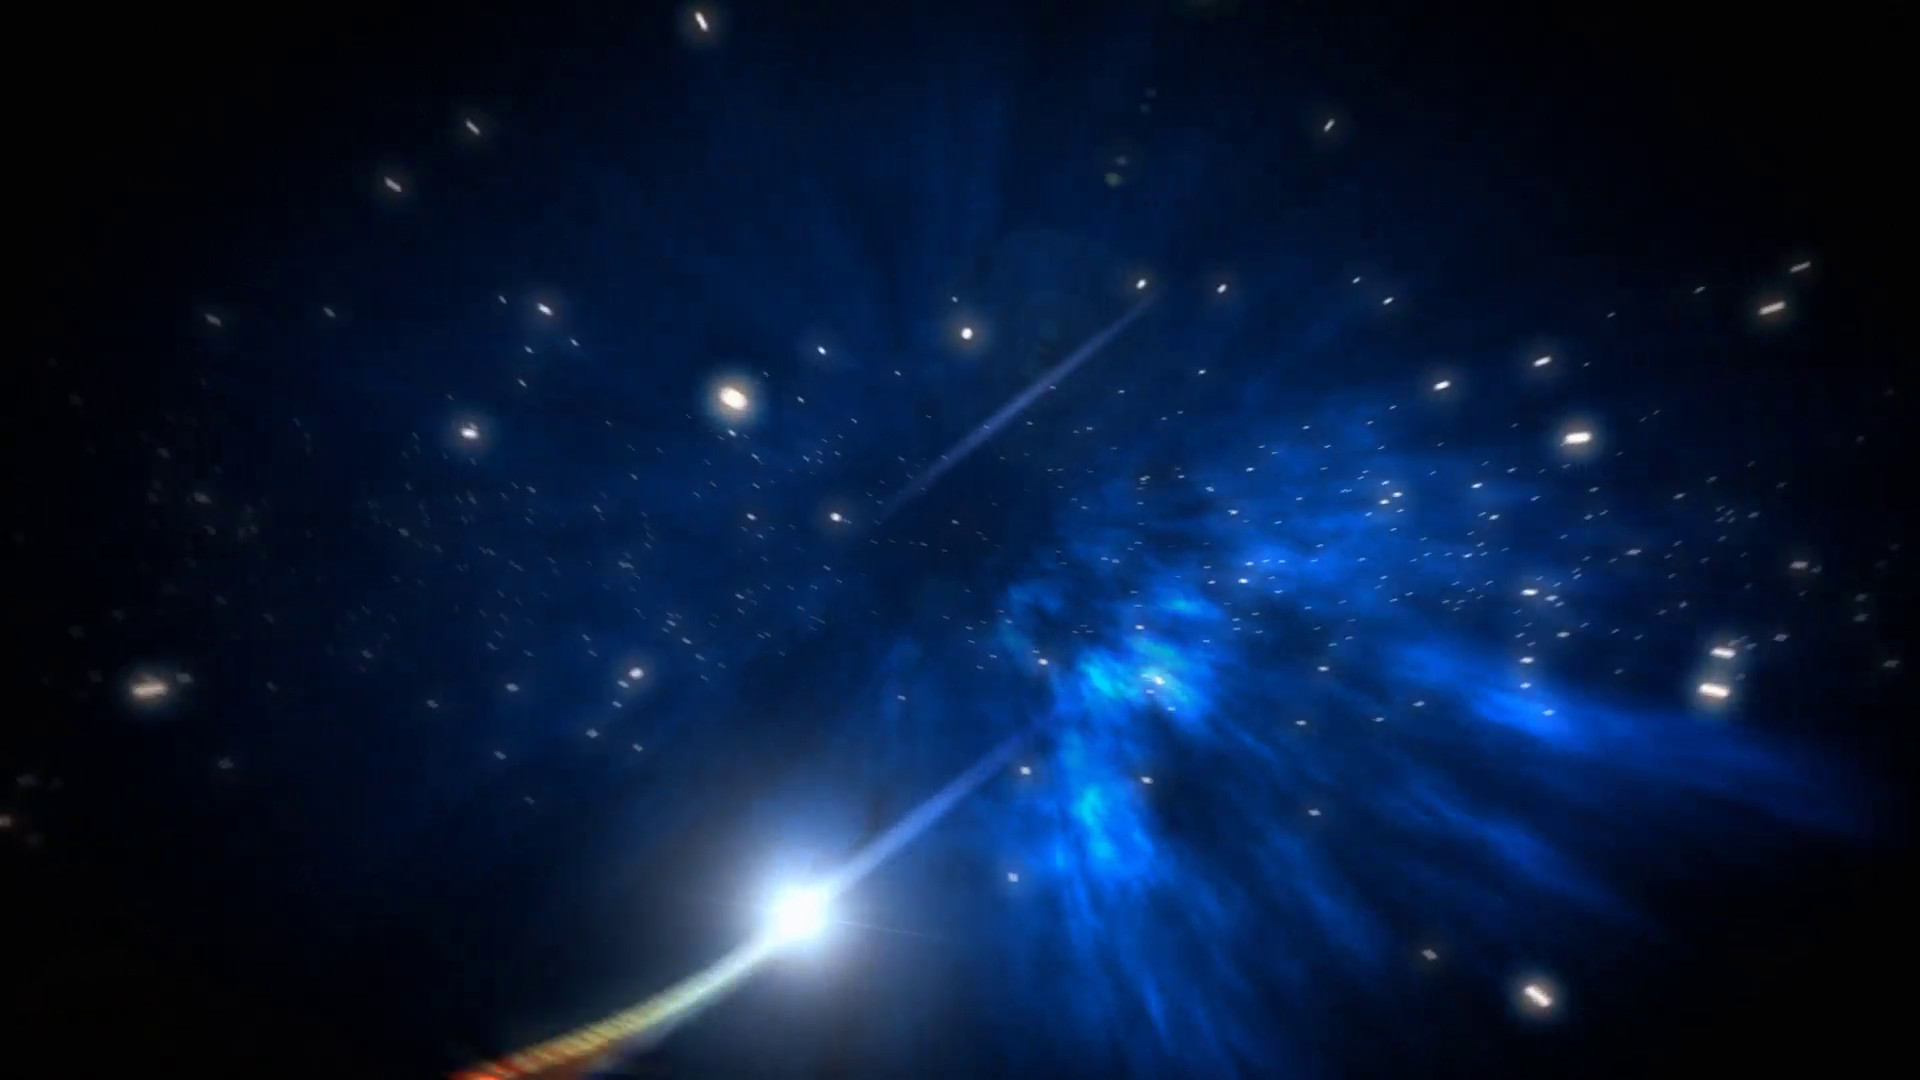 shooting star wallpaper,himmel,weltraum,astronomisches objekt,blau,atmosphäre